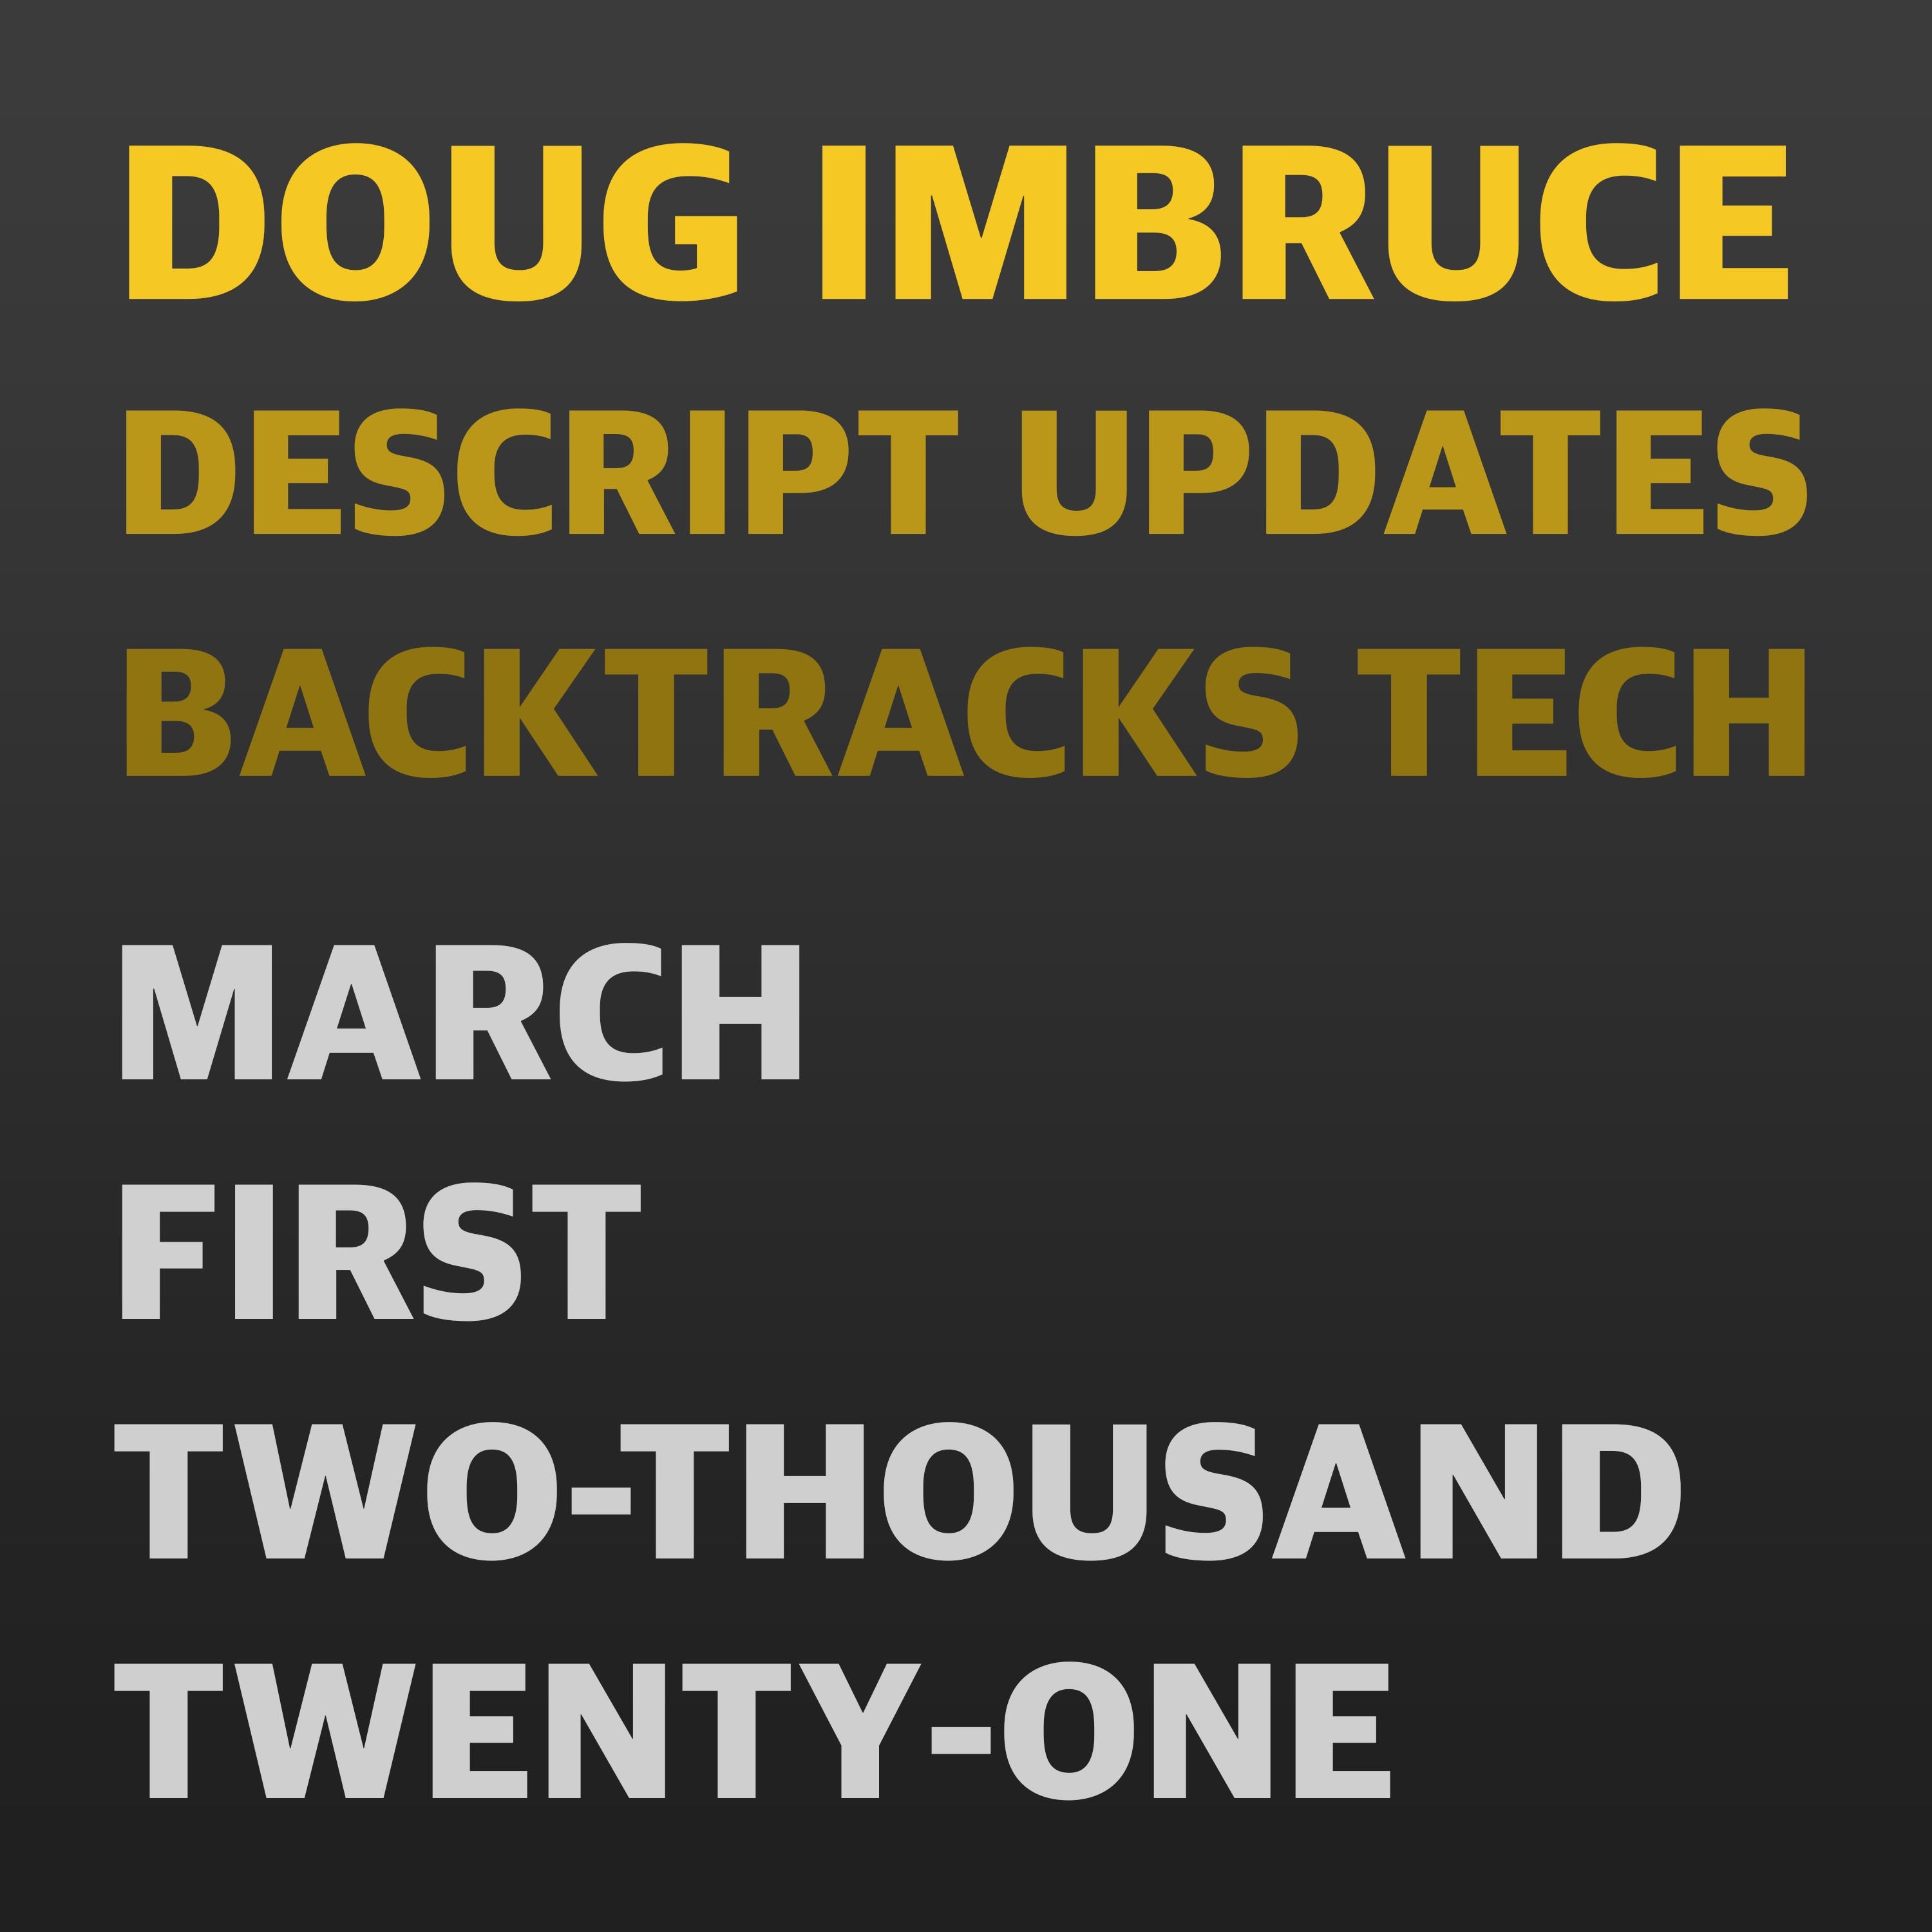 Doug Imbruce of PODZ, Descript Improvements, and New Tech from Backtracks